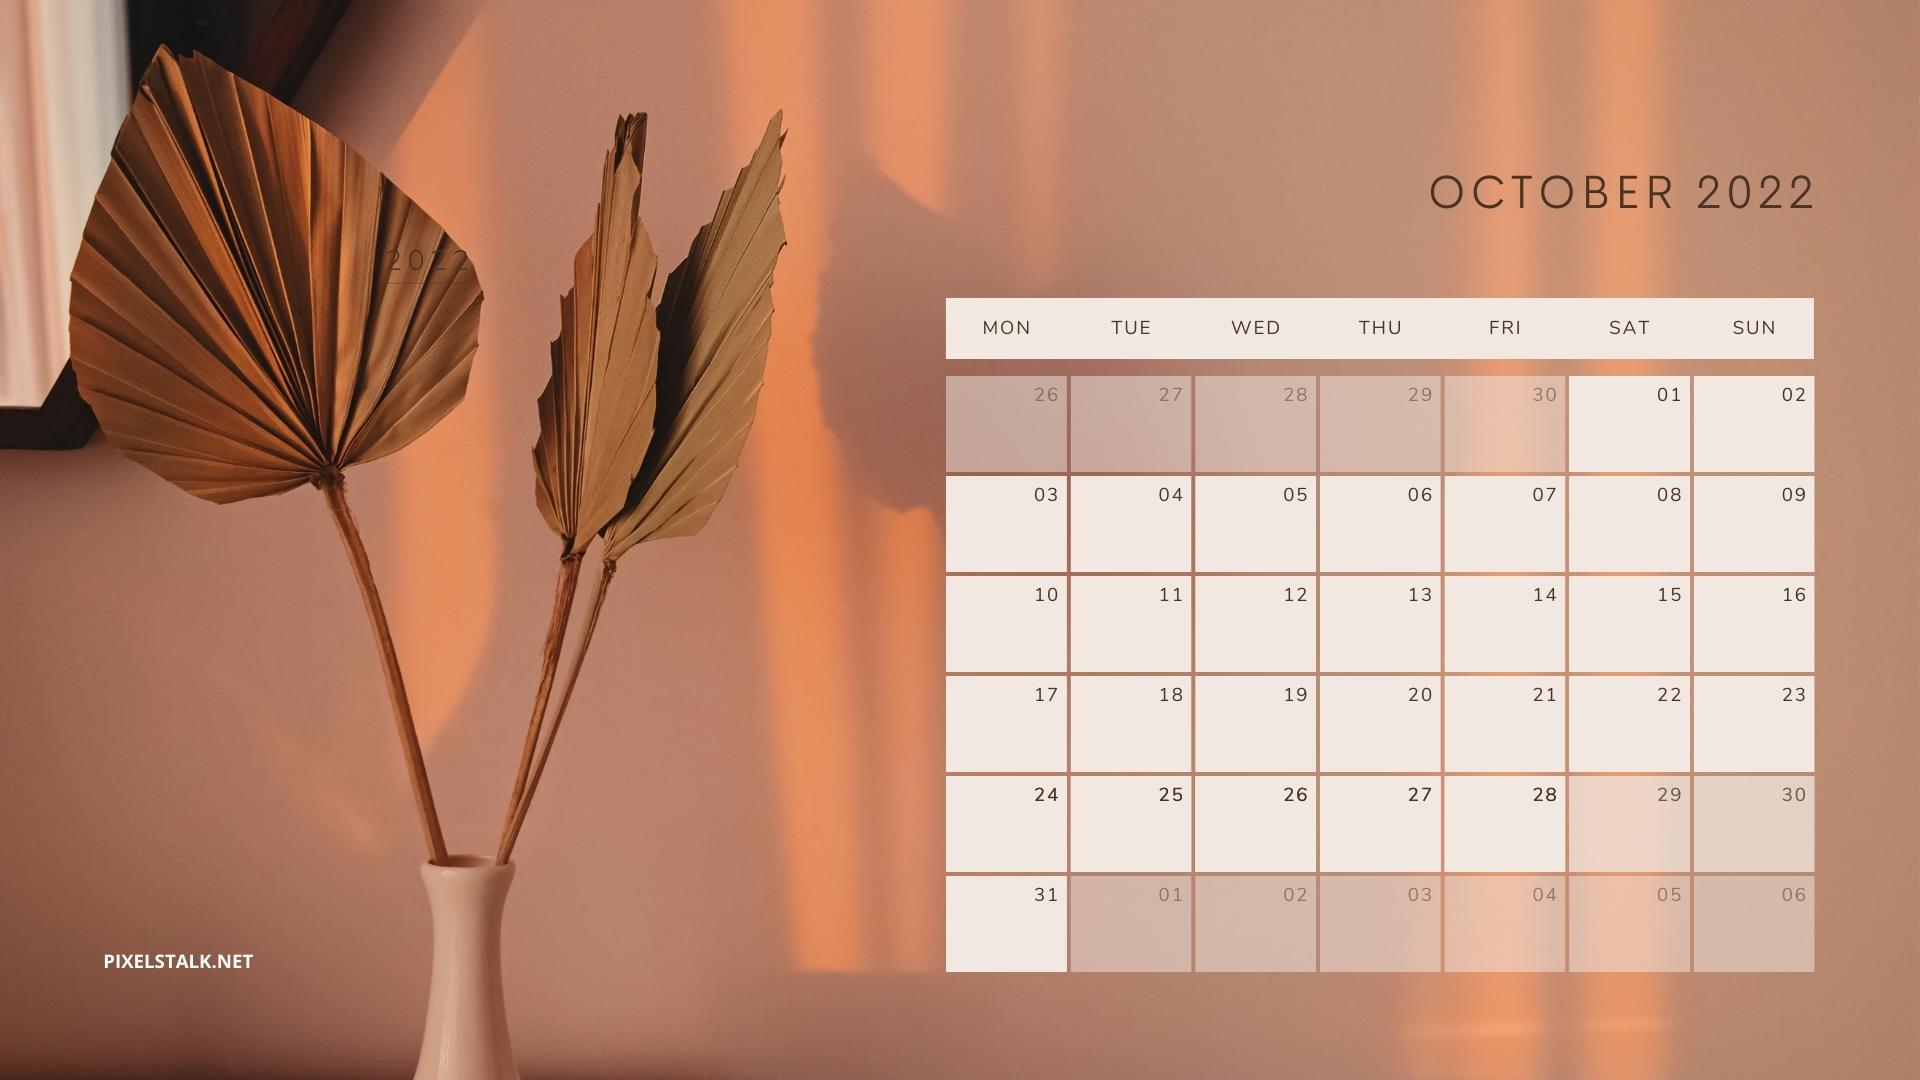 October 2023 Calendar Wallpaper  47 Cute iPhone Backgrounds